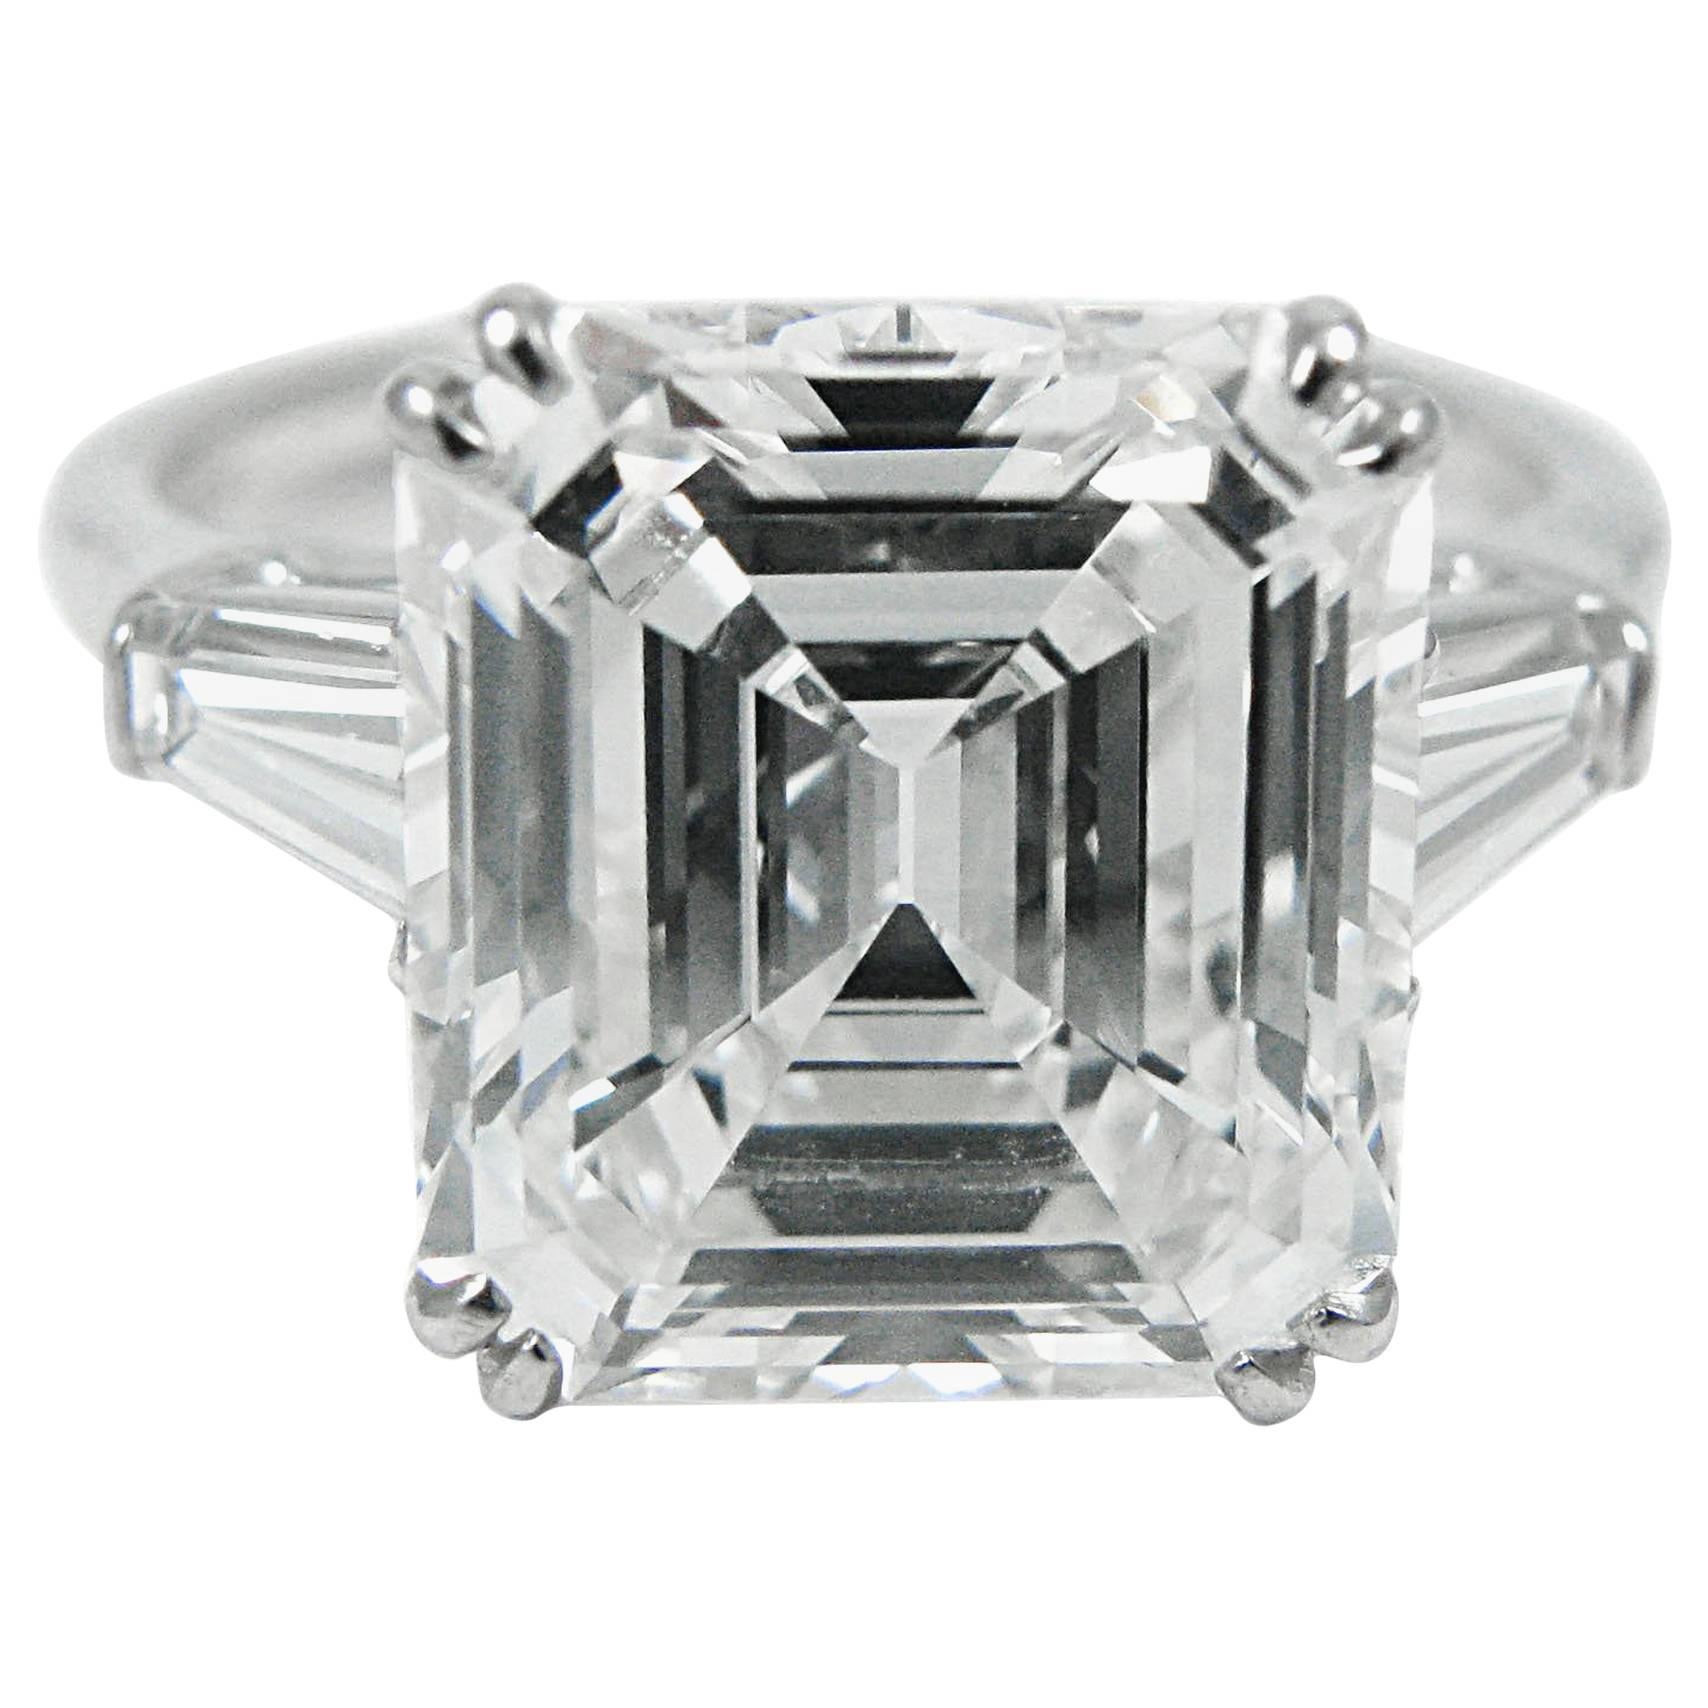 Harry Winston 4.01 Carat Emerald Cut Diamond Platinum Ring GIA